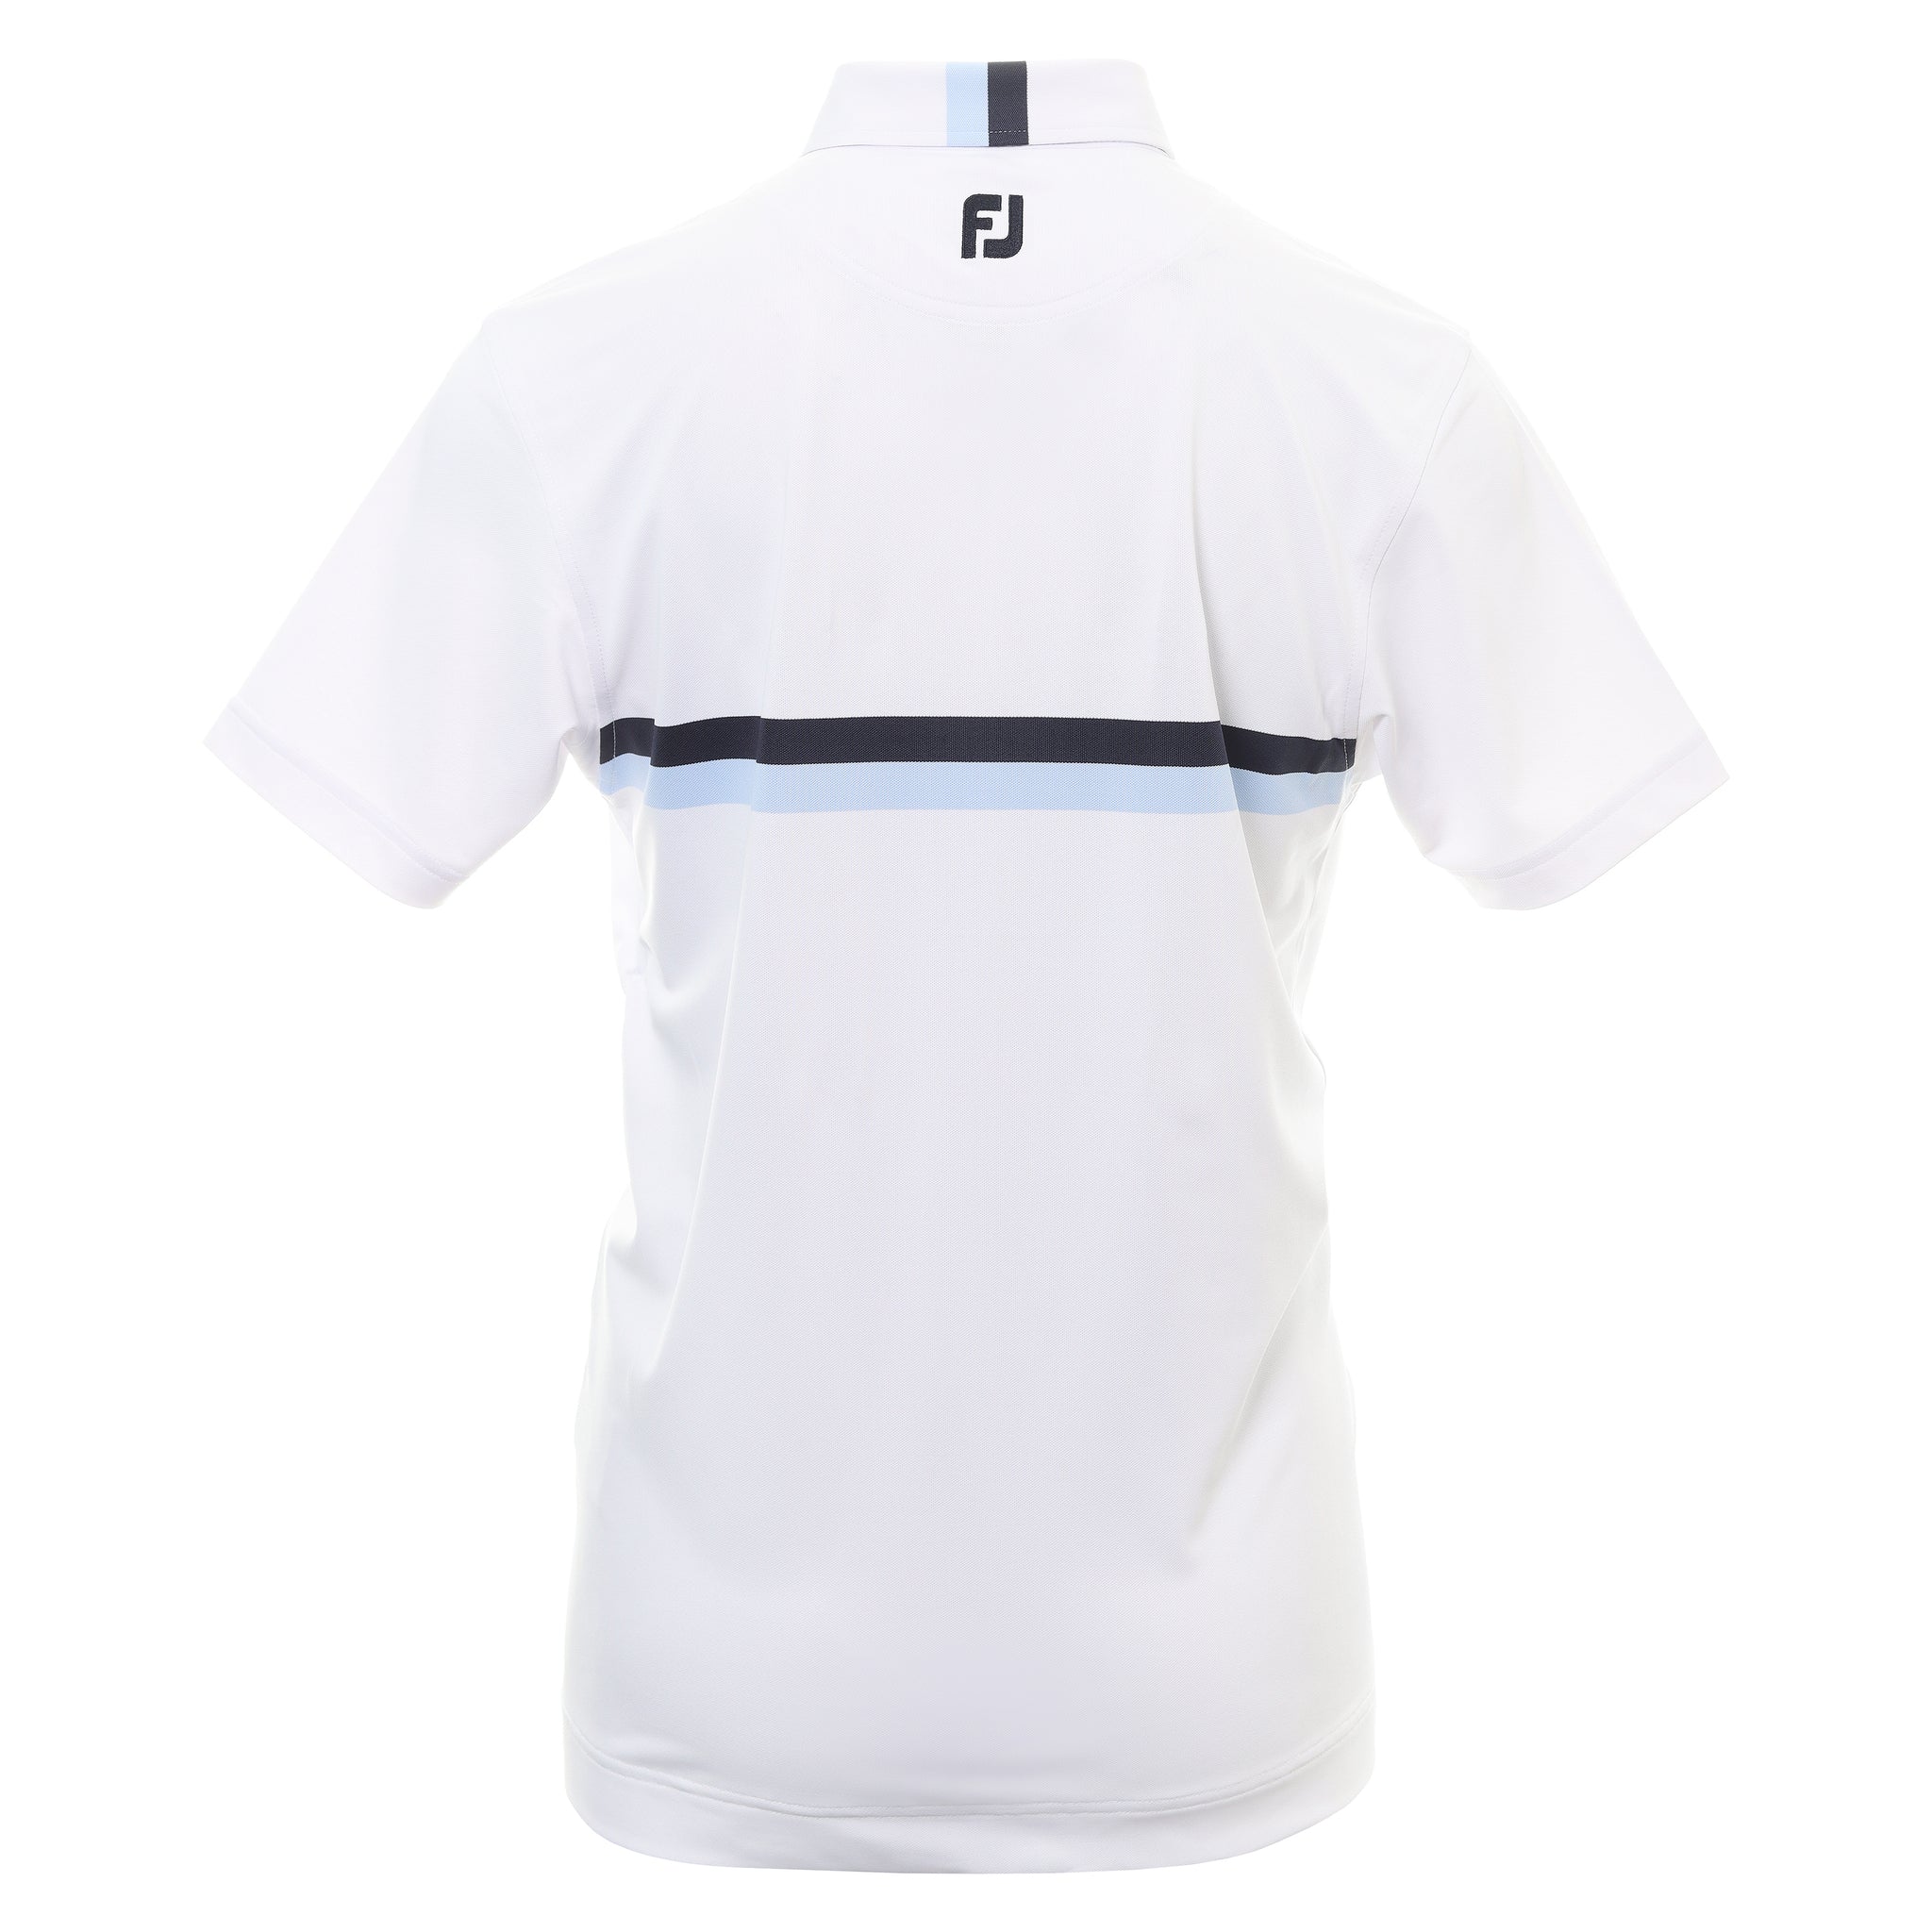 footjoy-double-chest-band-pique-golf-shirt-88443-white-navy-light-blue